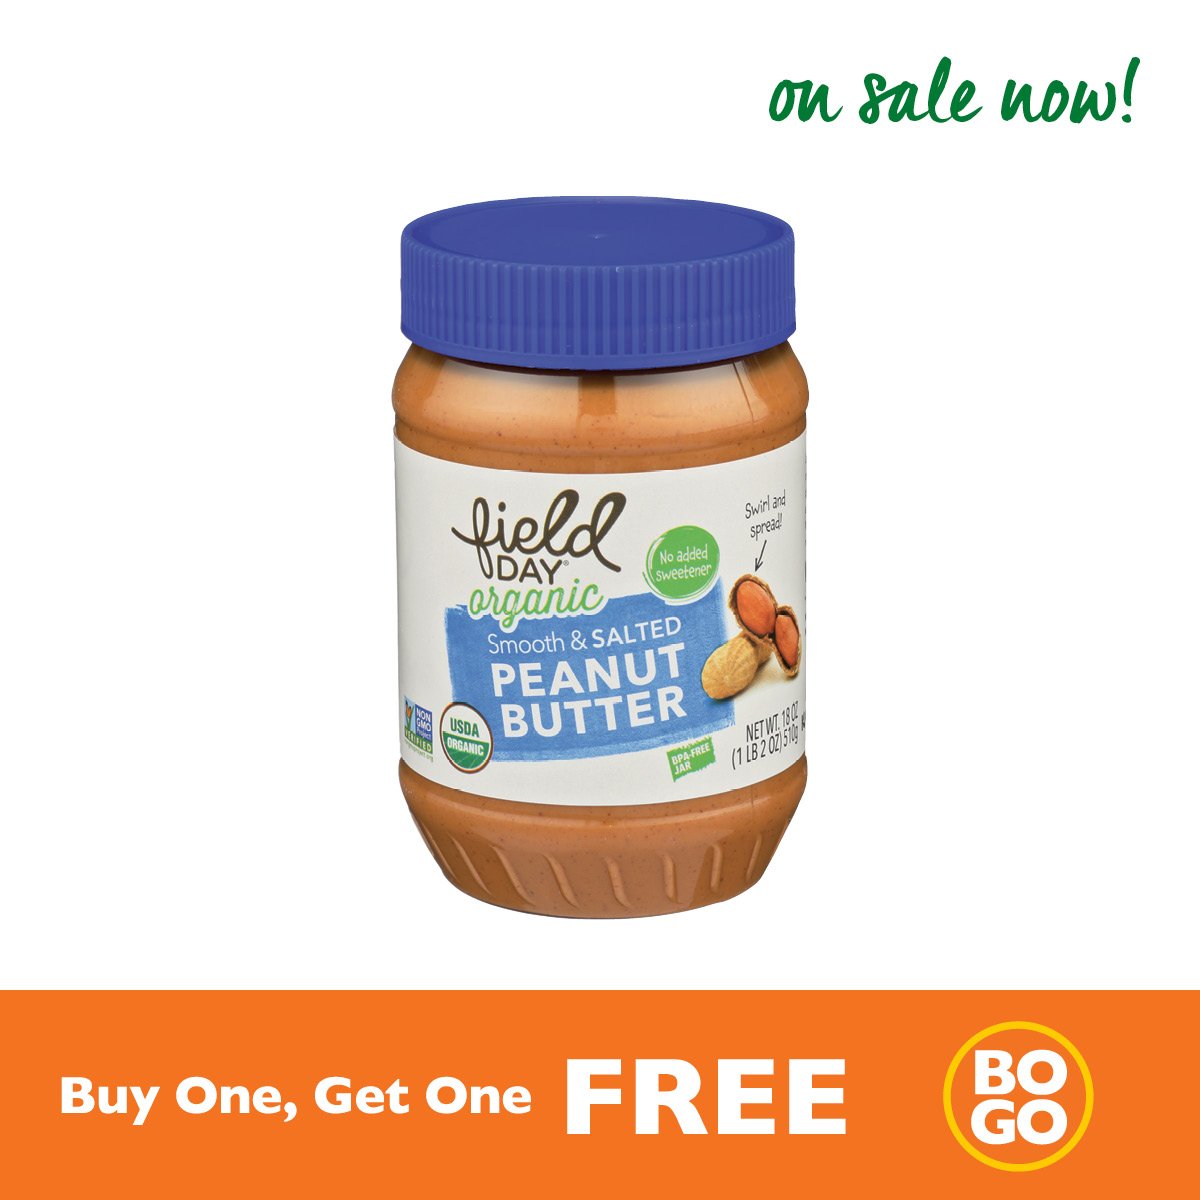 A-10-Field Day-Organic Peanut Butter.jpg